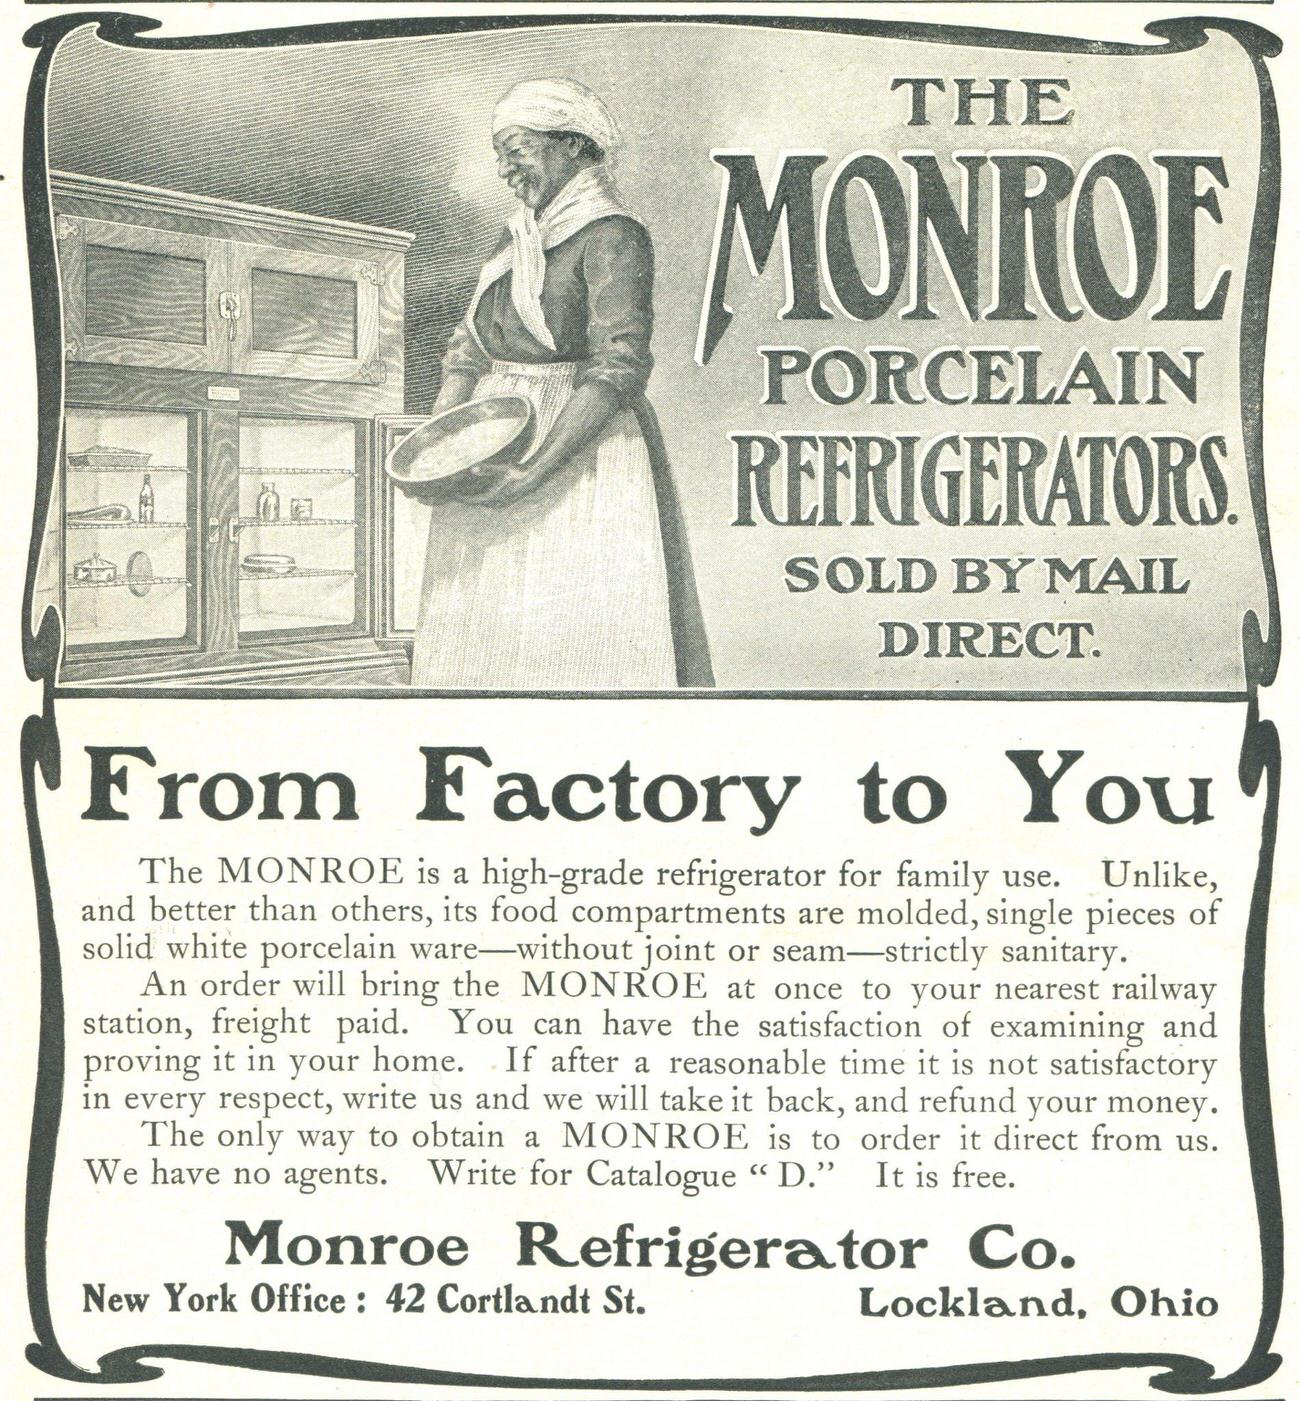 Monroe porcelain refrigerators ad, Monroe Refrigerator Company, 1903.